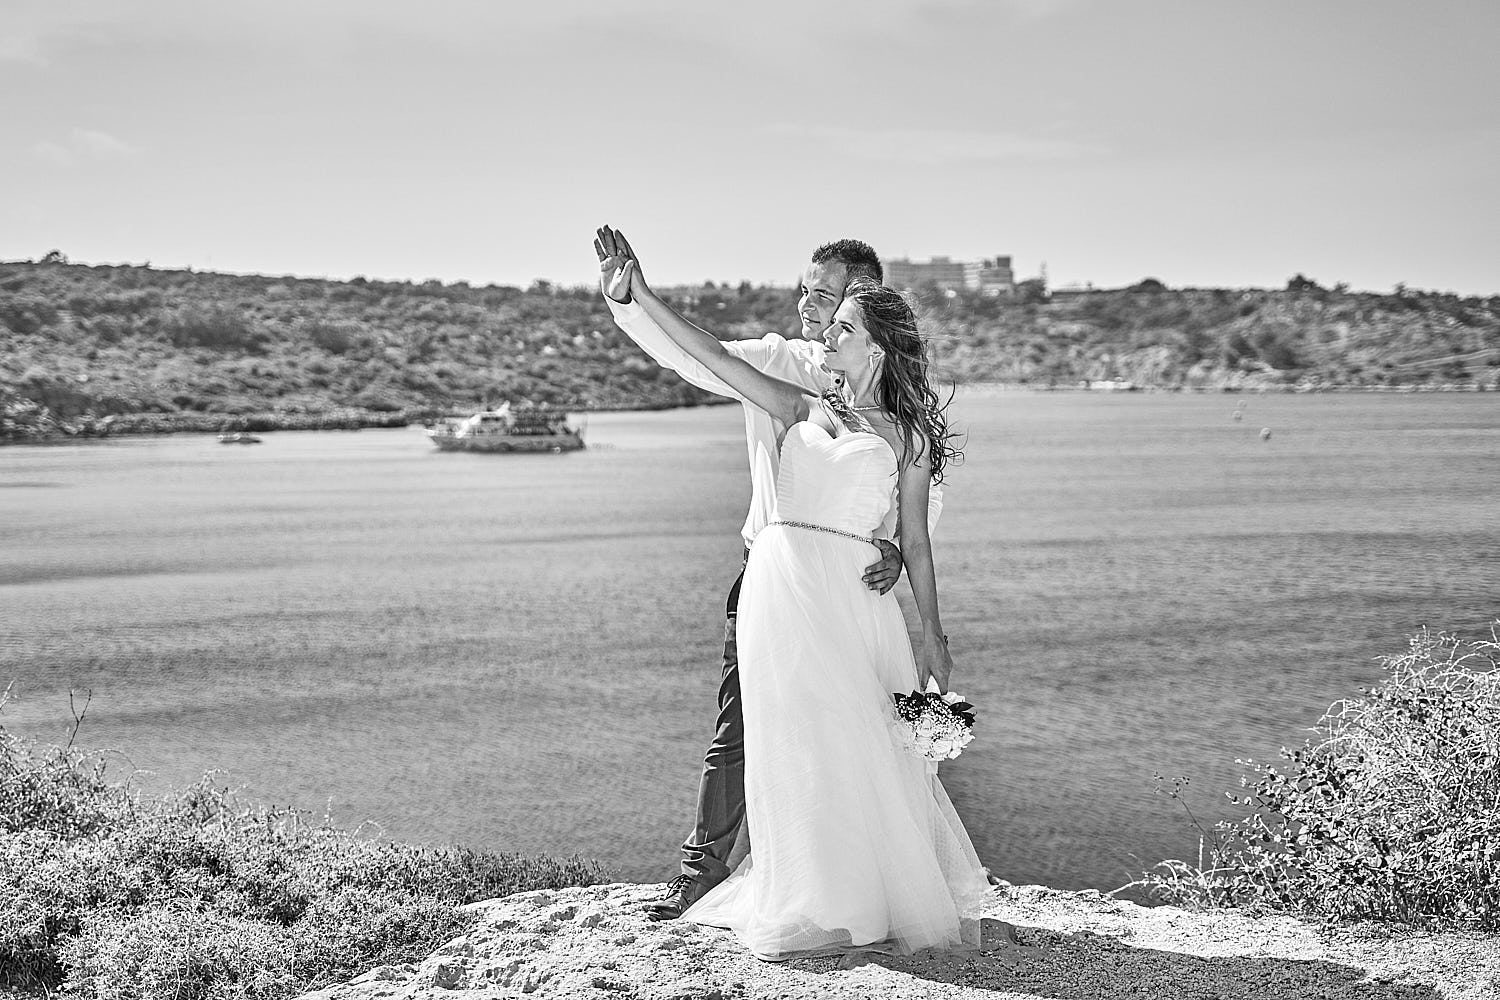 Wedding Photographer Cinematographer Happy Images Cyprus by Nagy Sándor